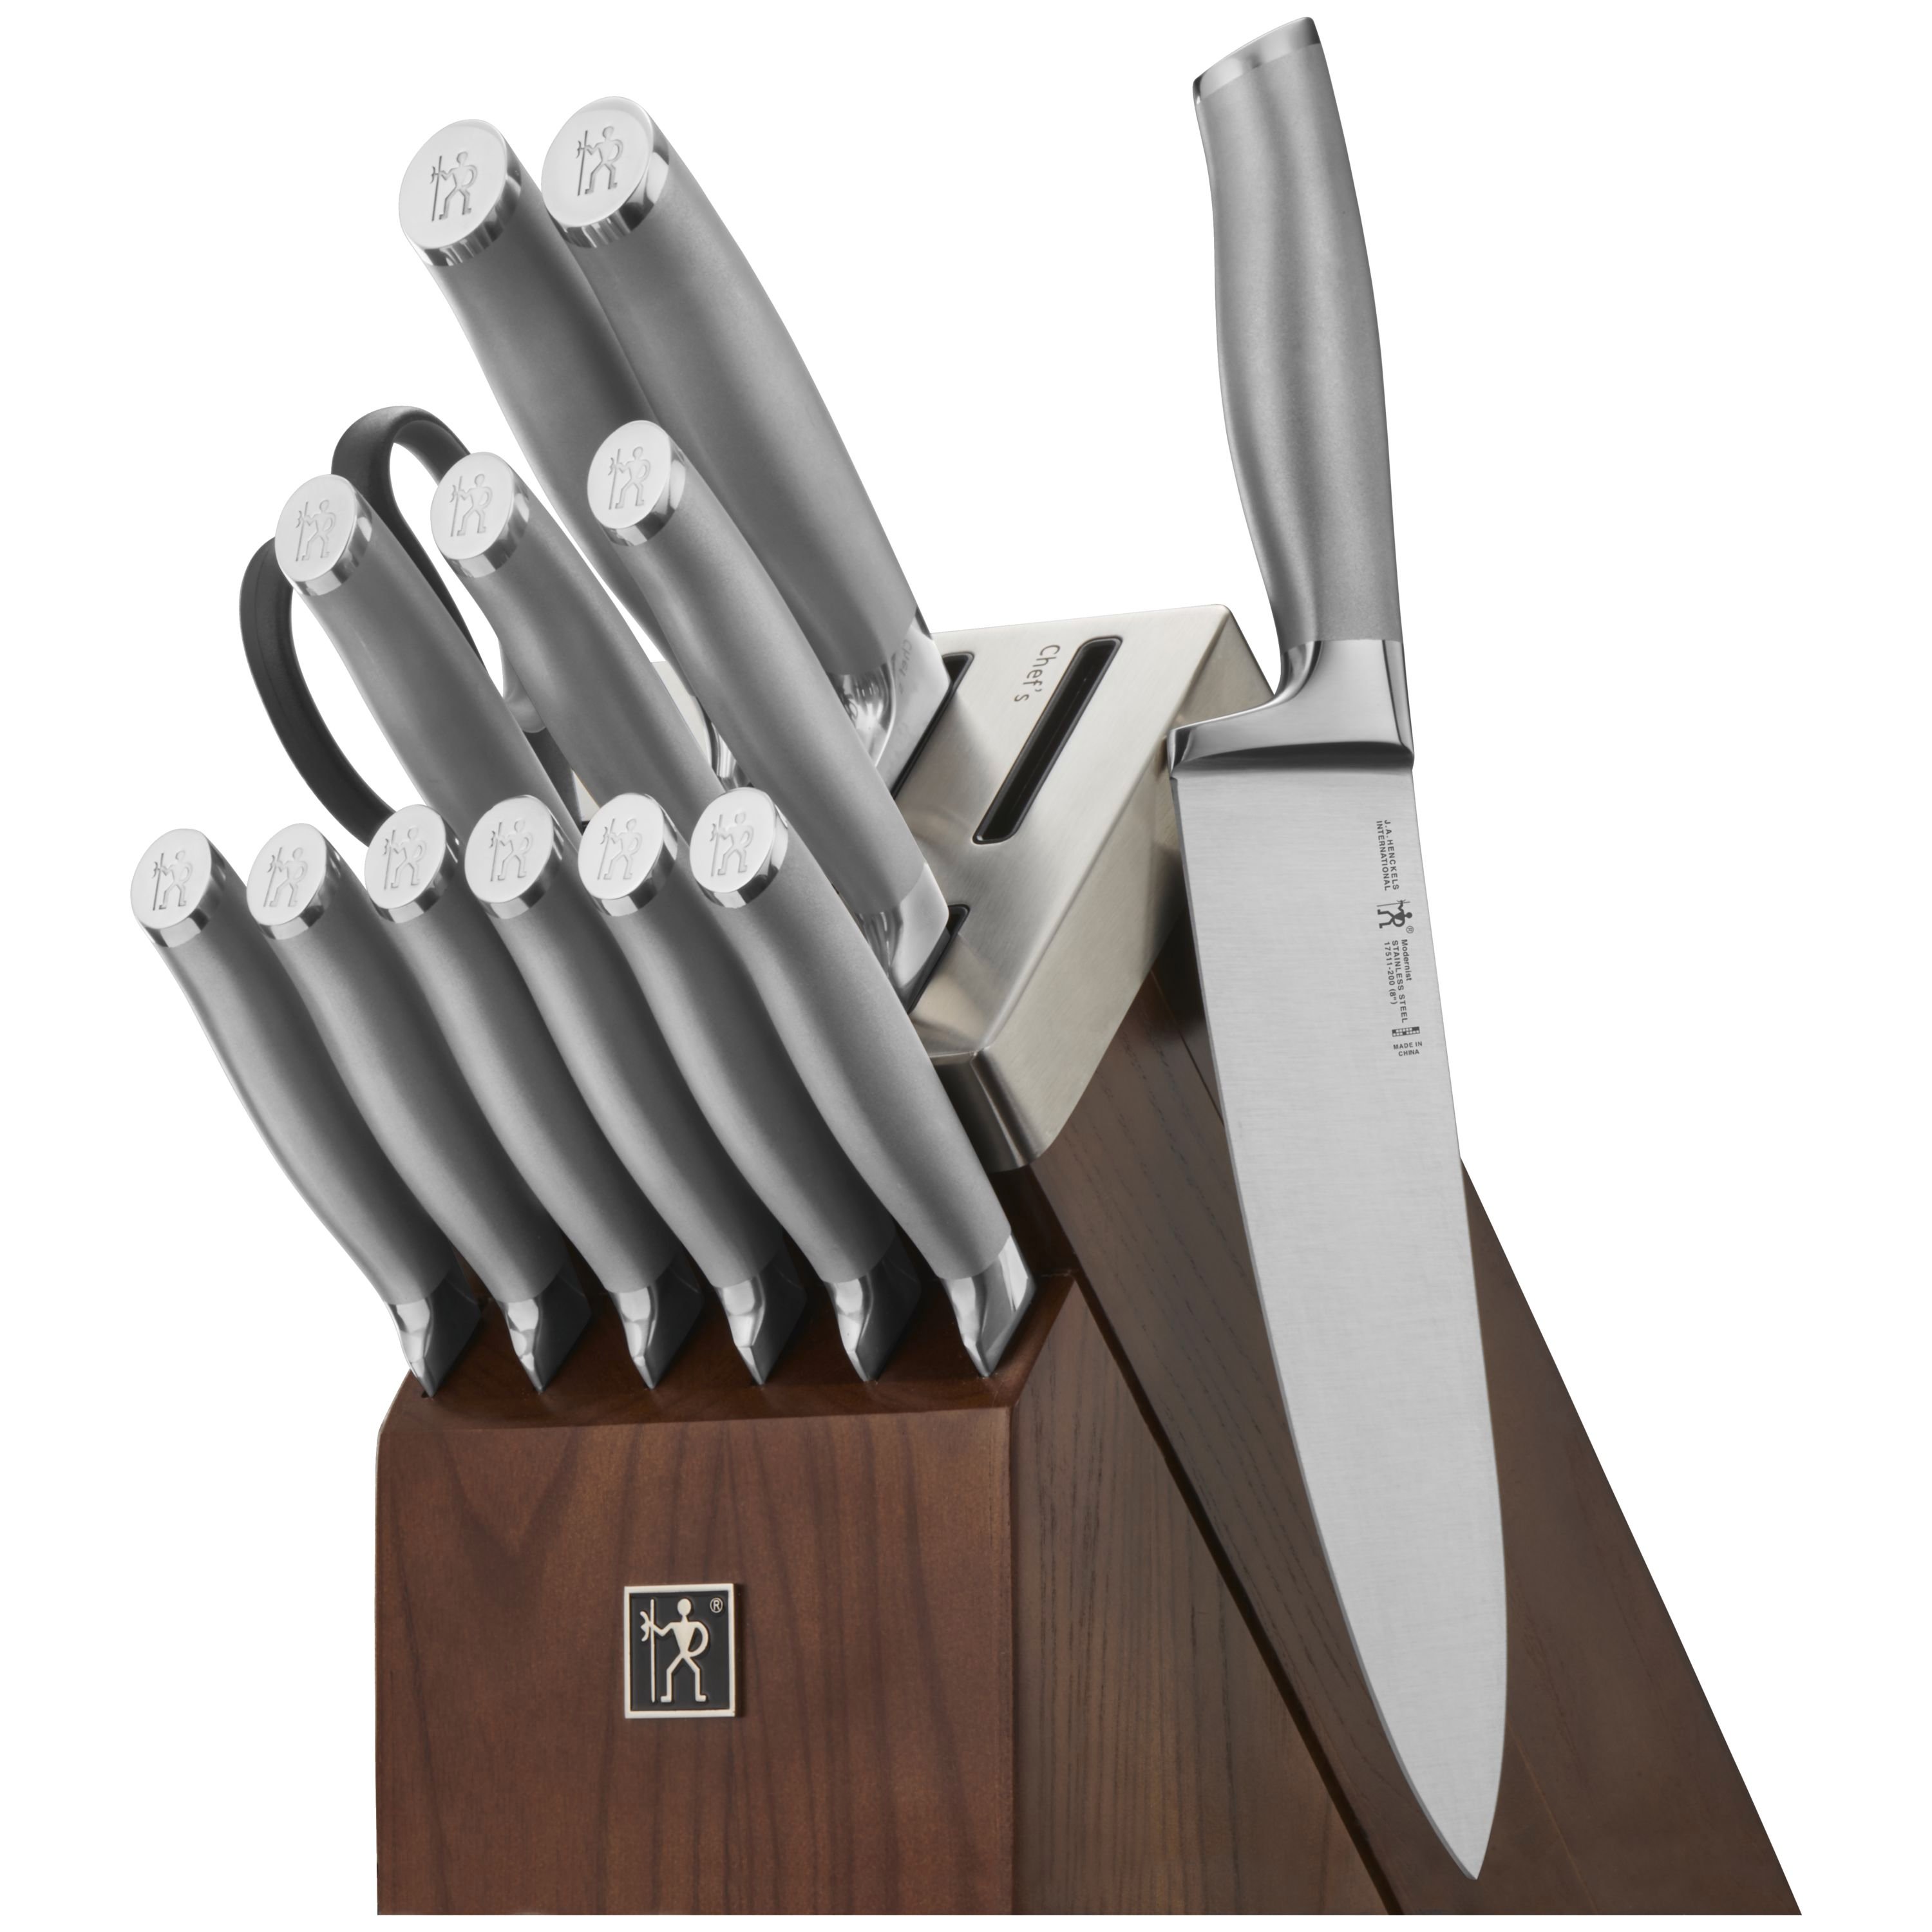 Henckels 20-Piece Modernist Self Sharpening Knife Set